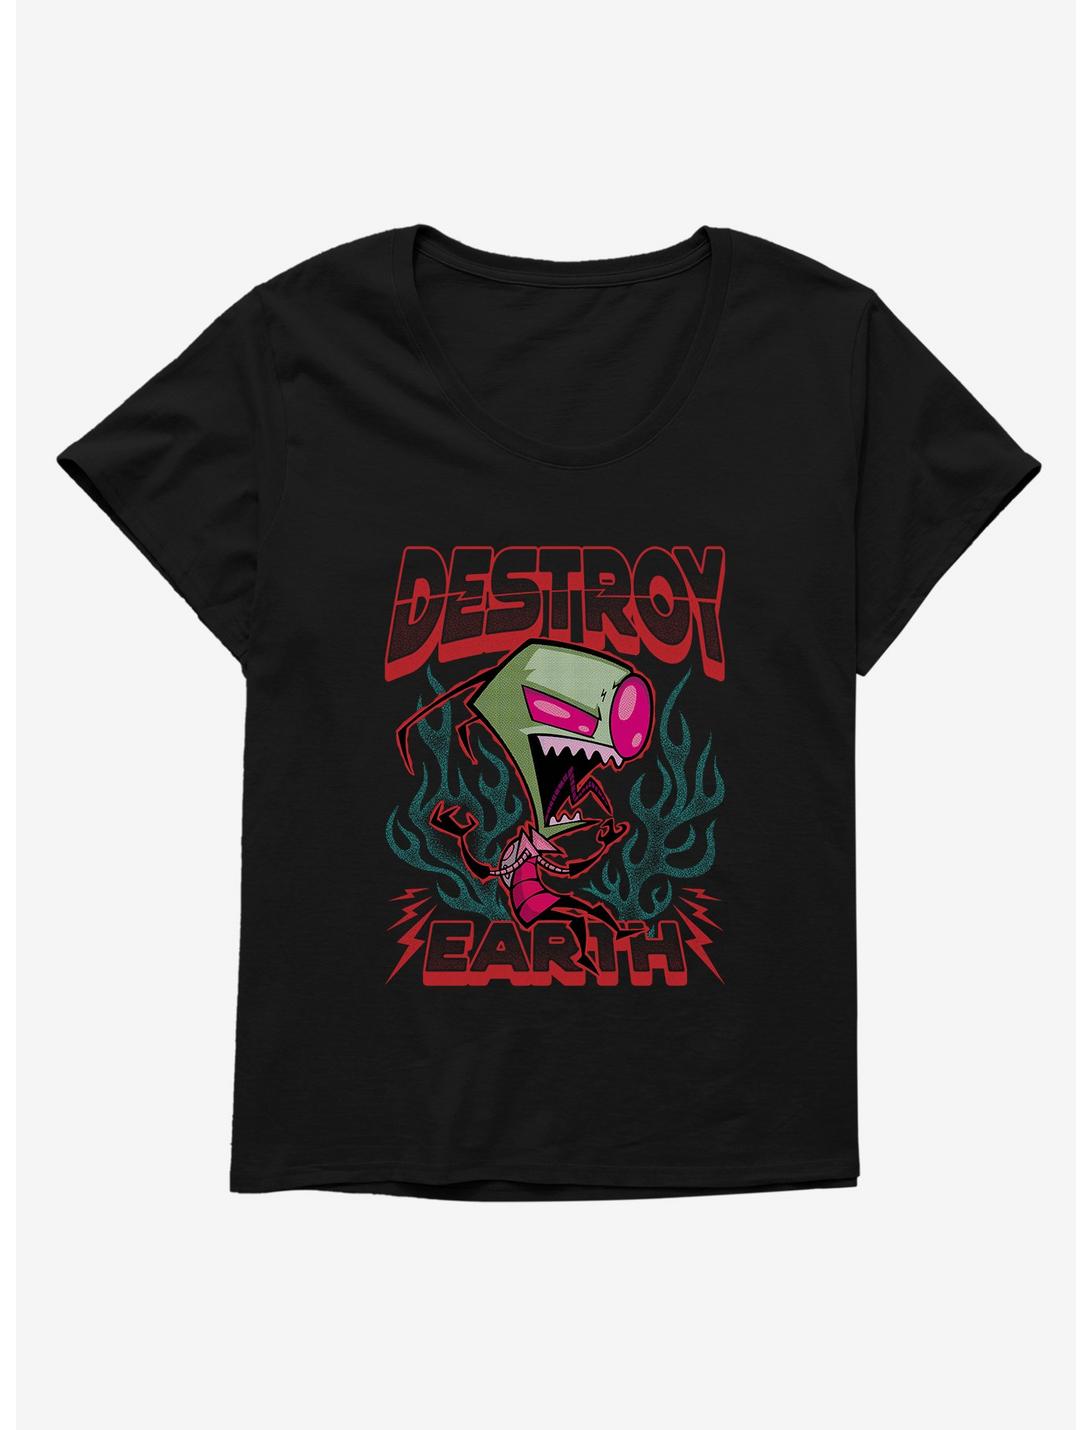 Invader Zim Destroy Womens T-Shirt Plus Size, , hi-res